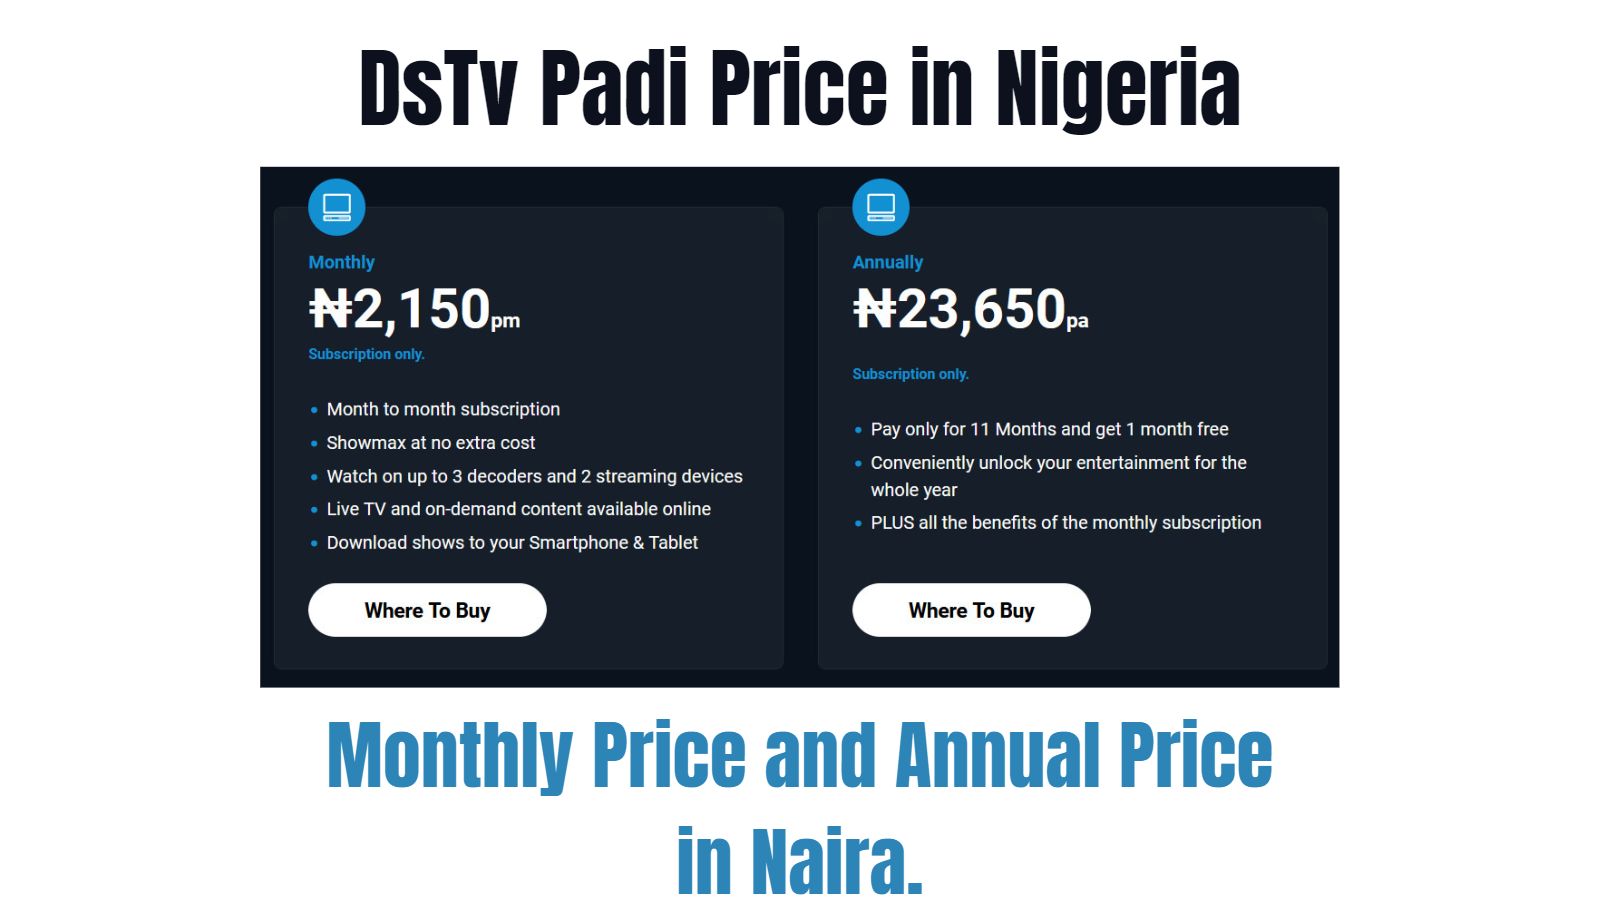 DsTv Padi Subscription Price in Nigeria